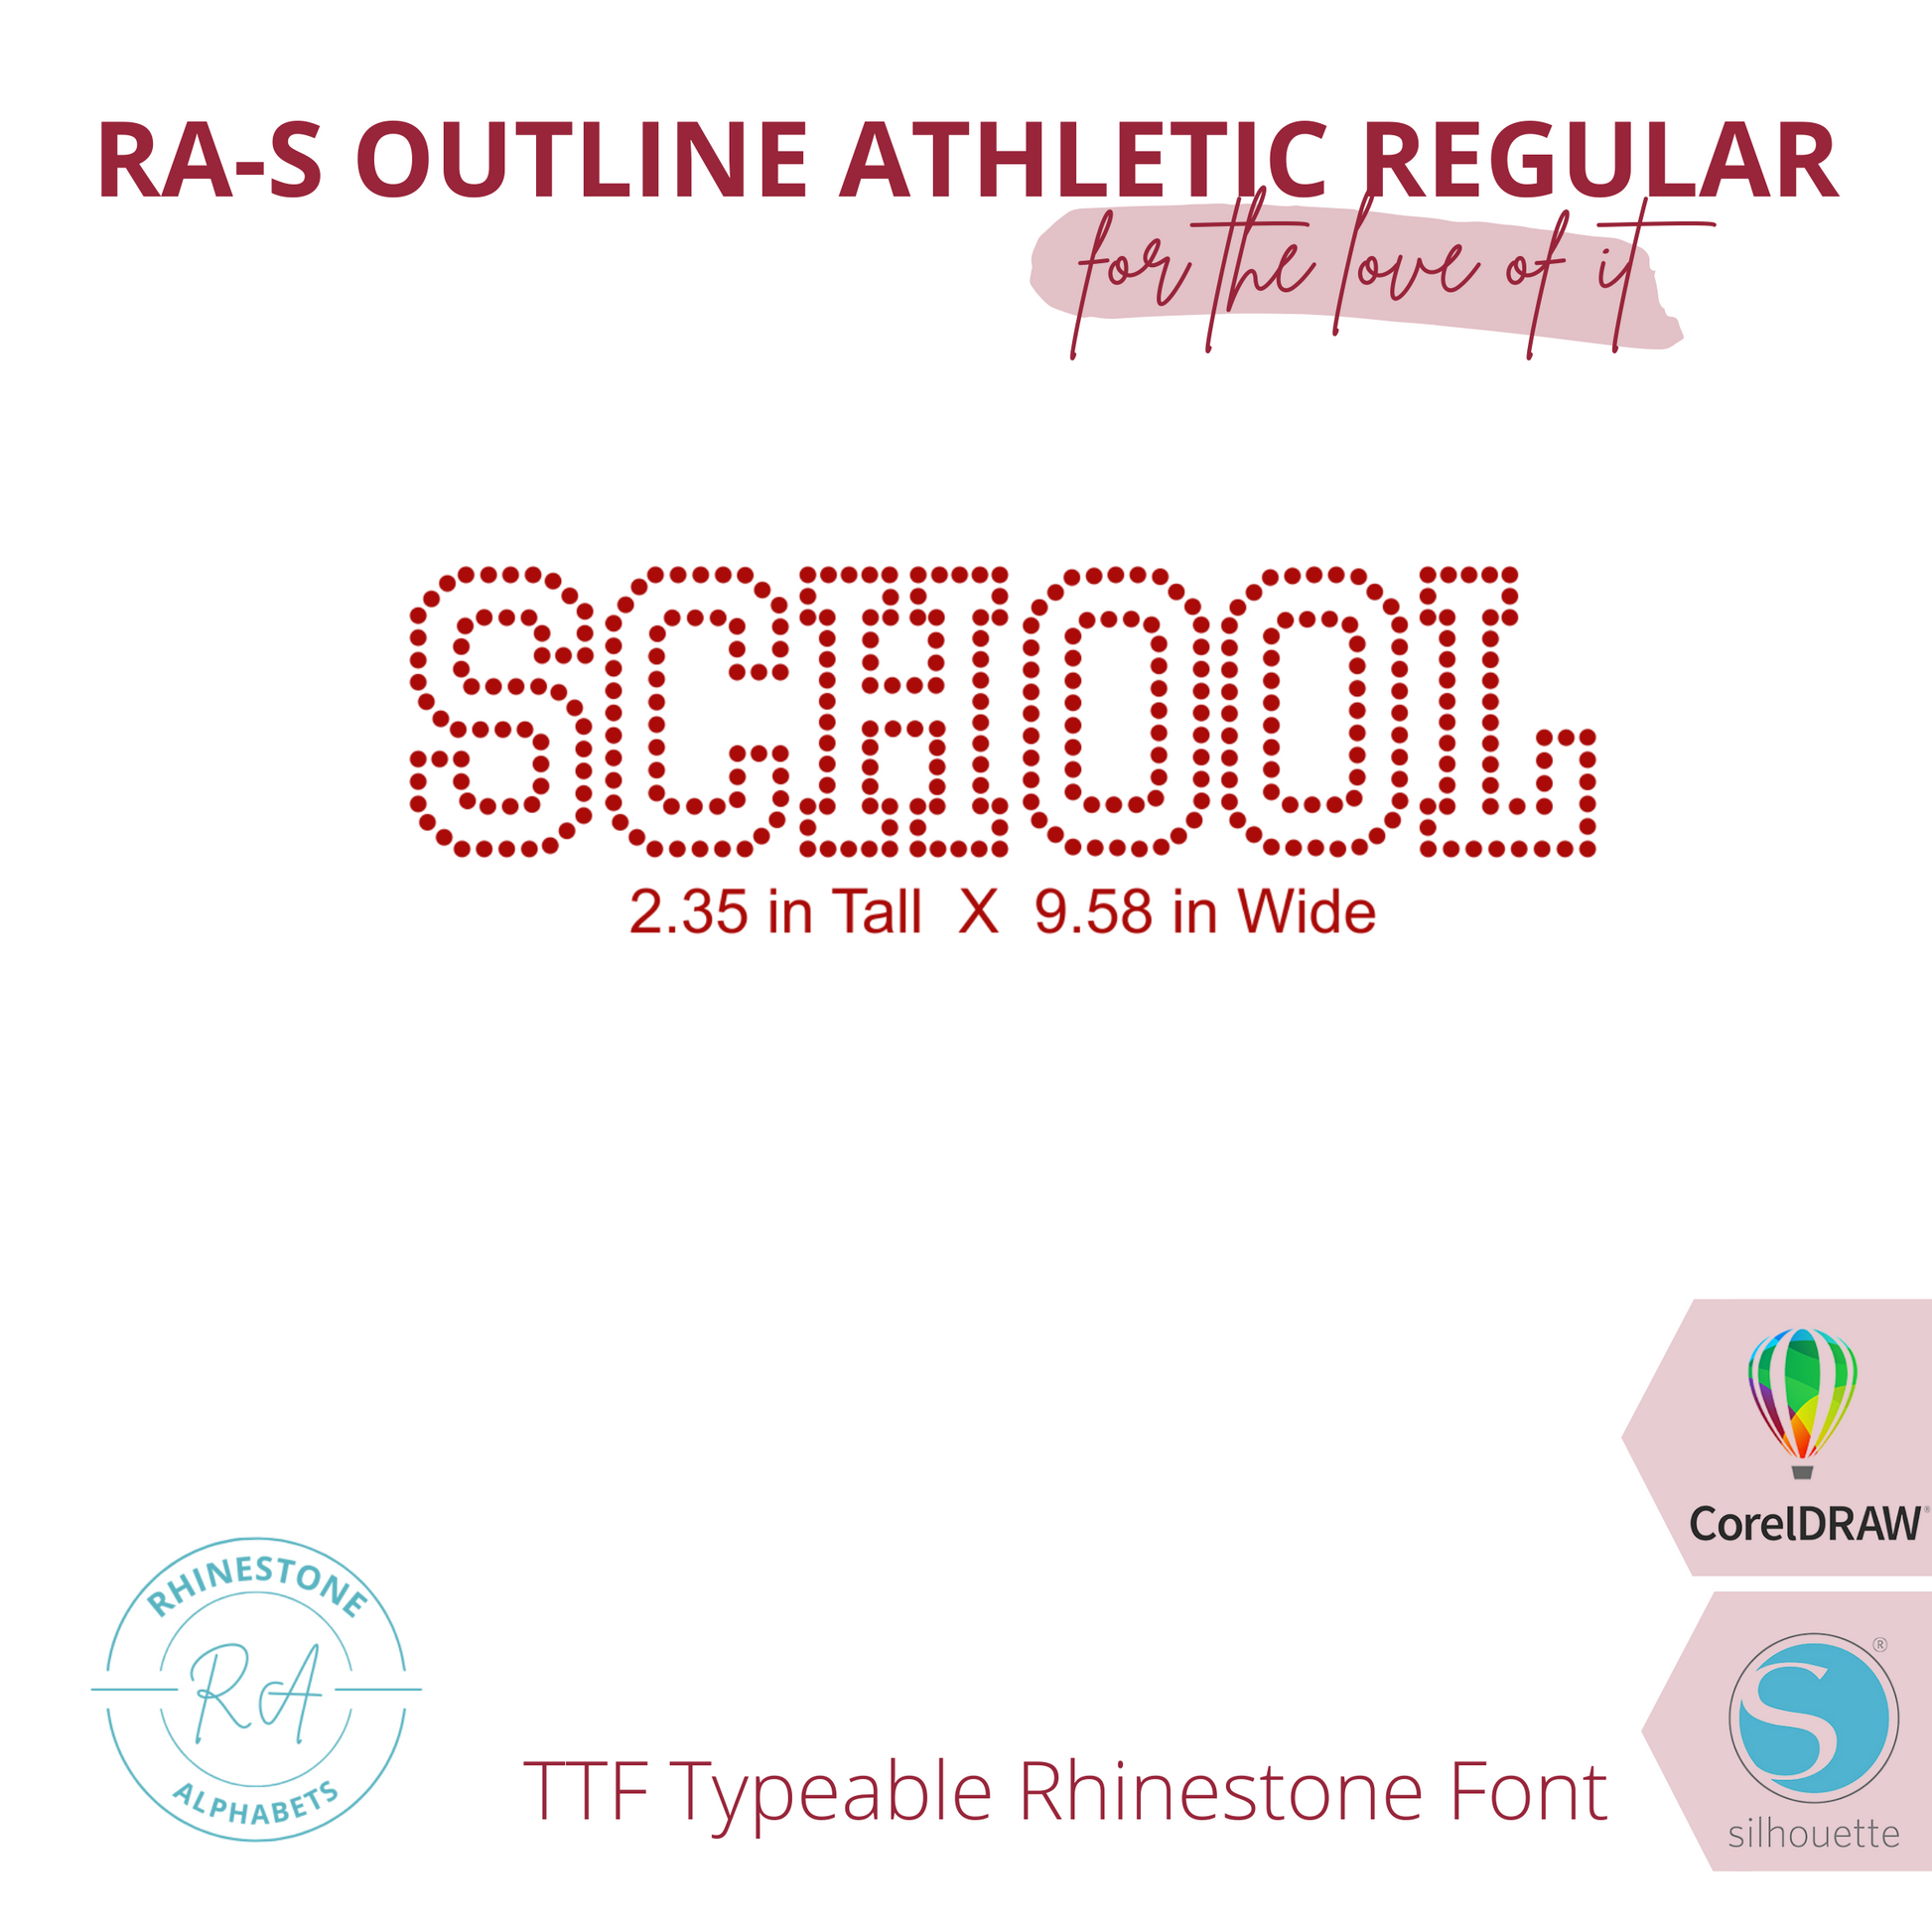 RA-S Outline Athletic Regular - RhinestoneAlphabets